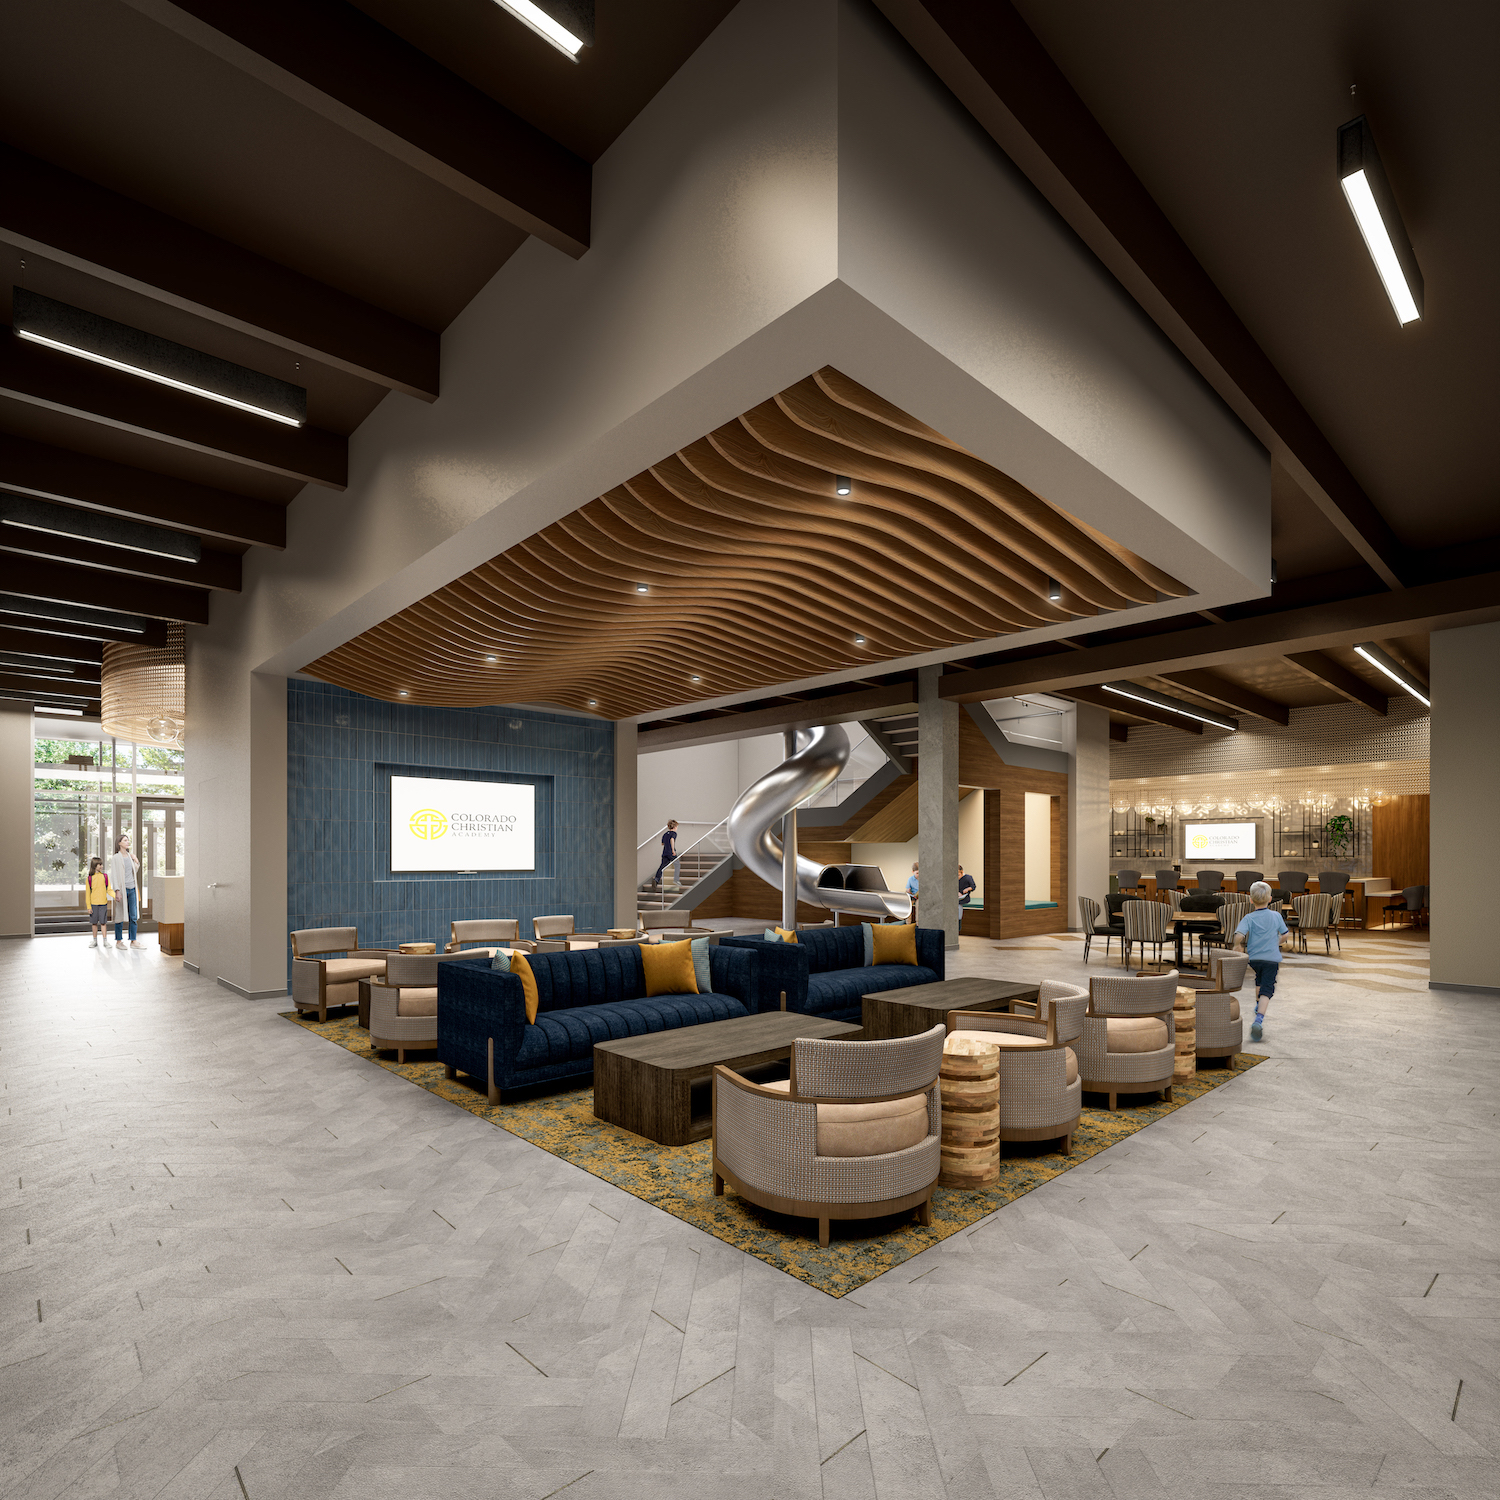 Interior design rendering for the Colorado Cristian Academy in Englewood, Colorado.